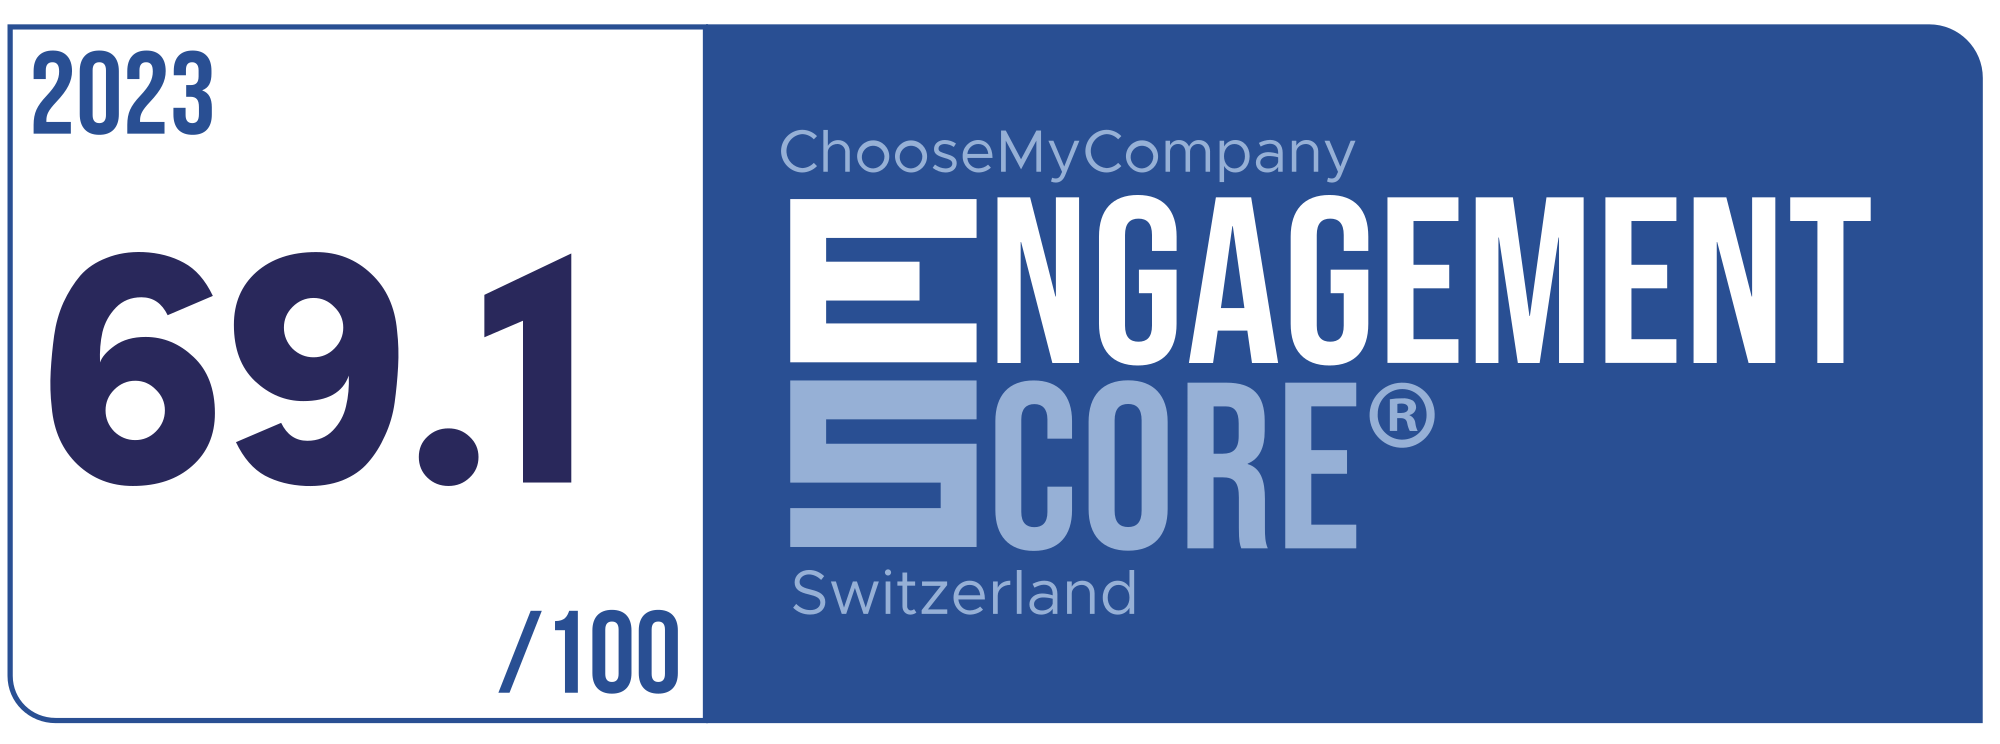 Label Engagement Score 2023 Switzerland